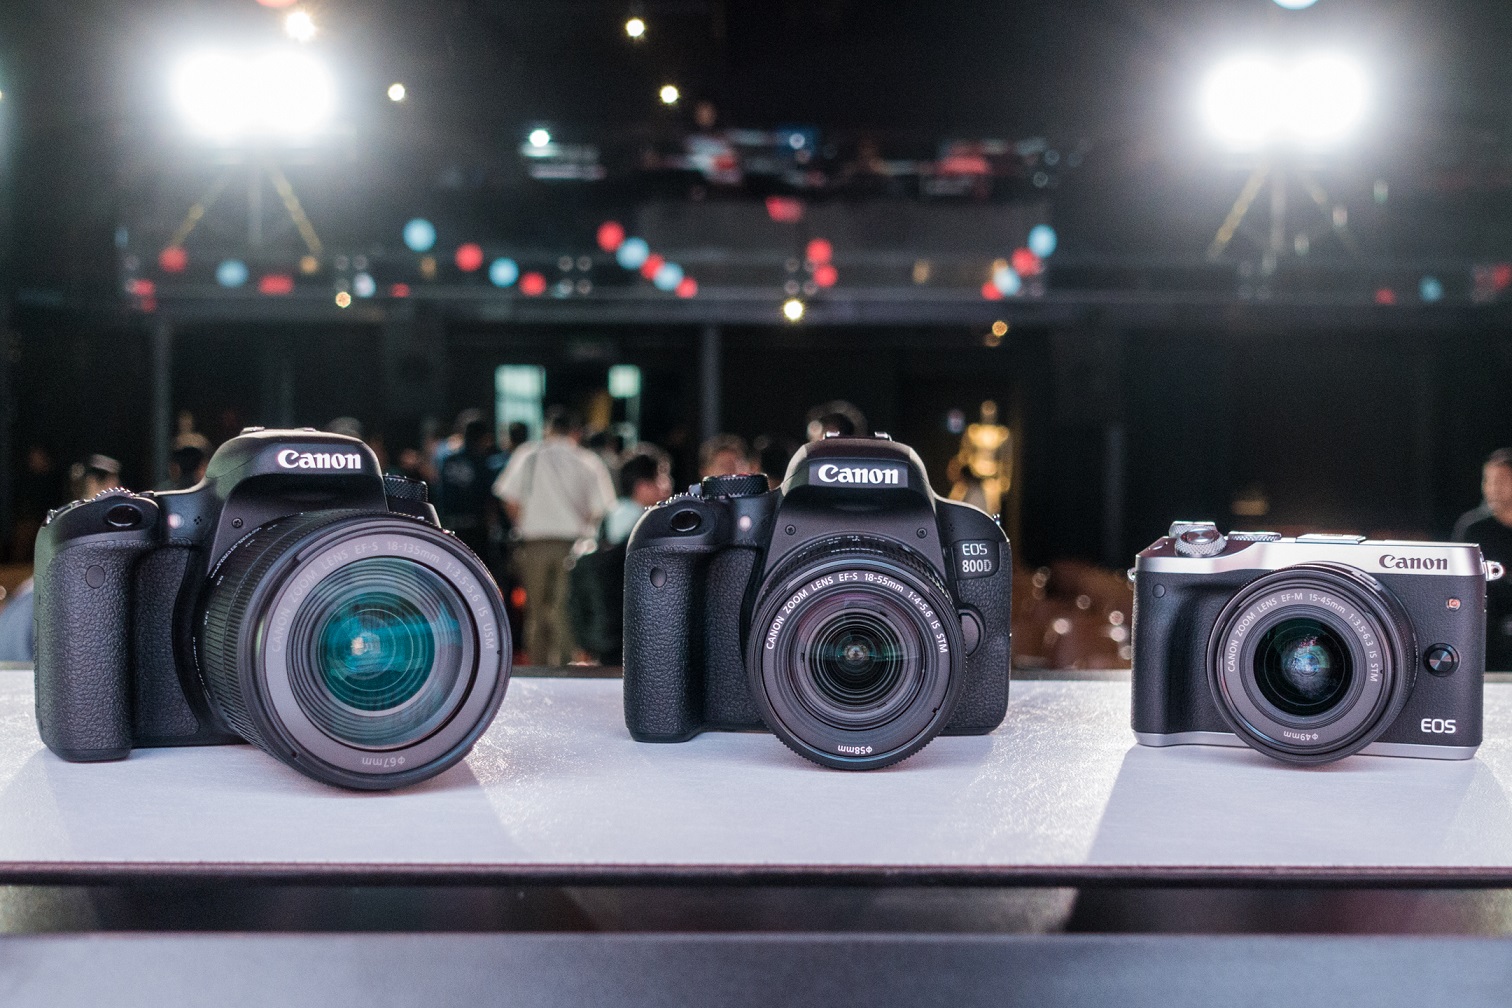 Canon introduces three new EOS cameras